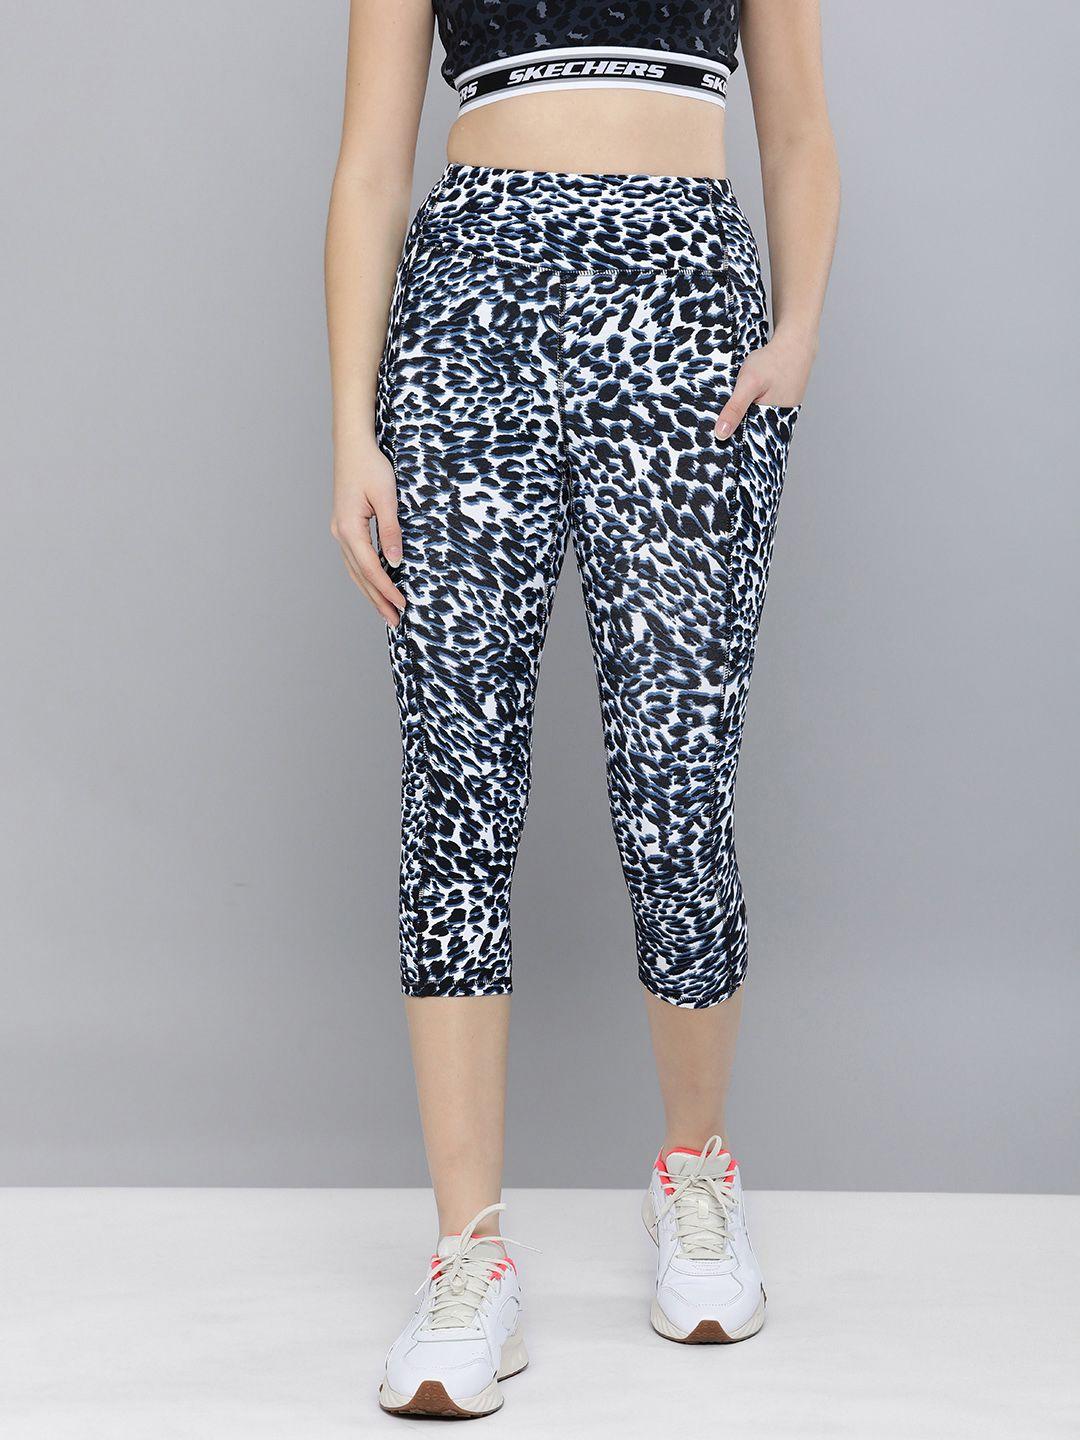 skechers women white & navy blue high-waist leopard midcalf tights